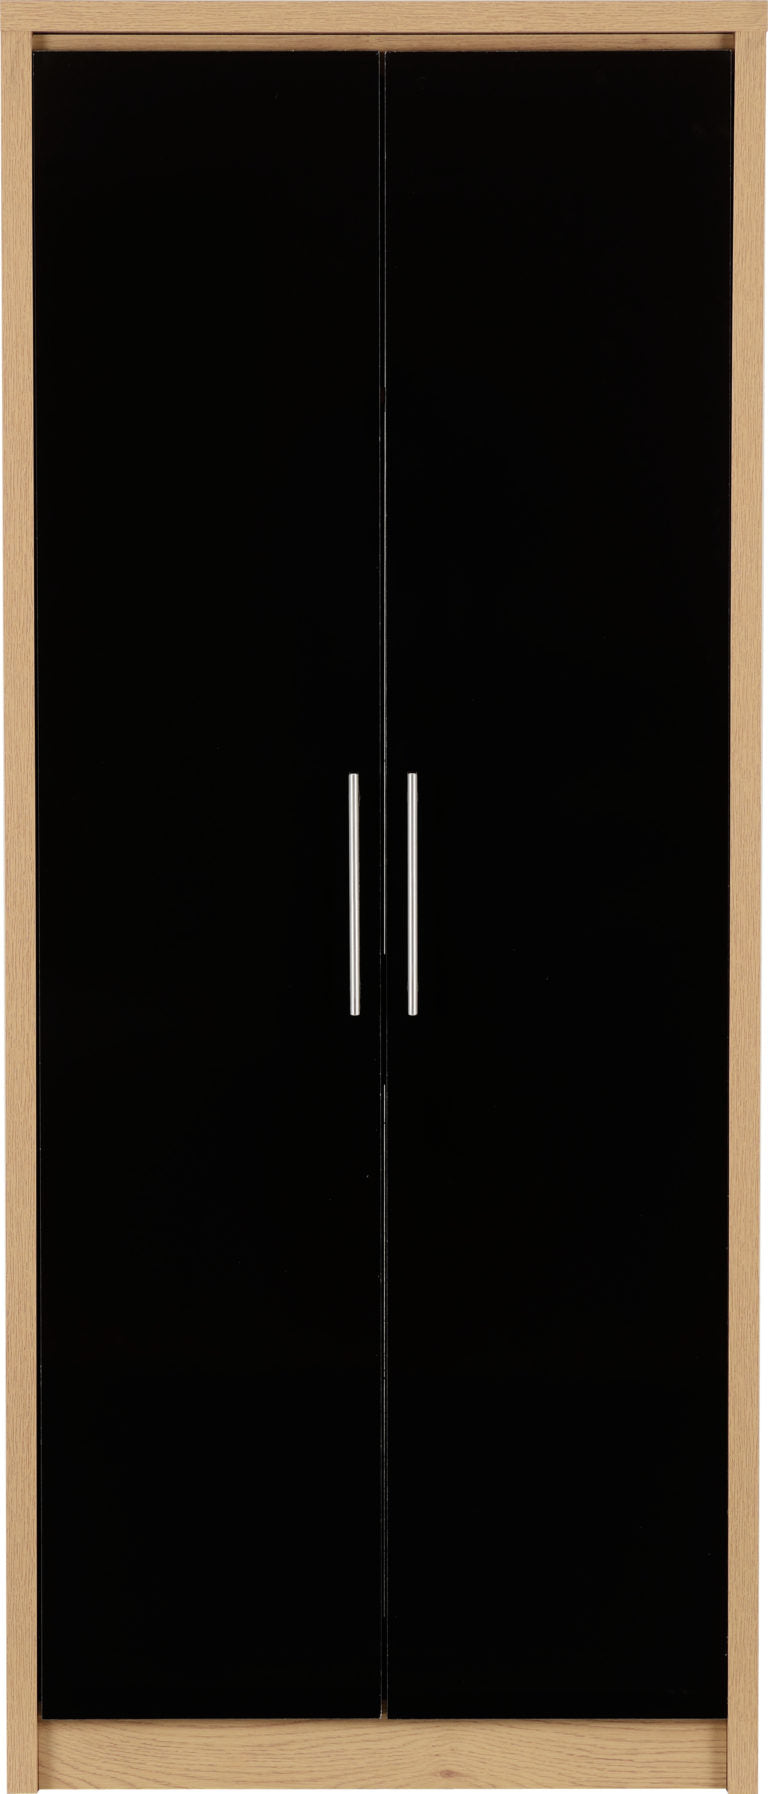 Seville 2 Door Wardrobe - Black High Gloss/Light Oak Effect Veneer